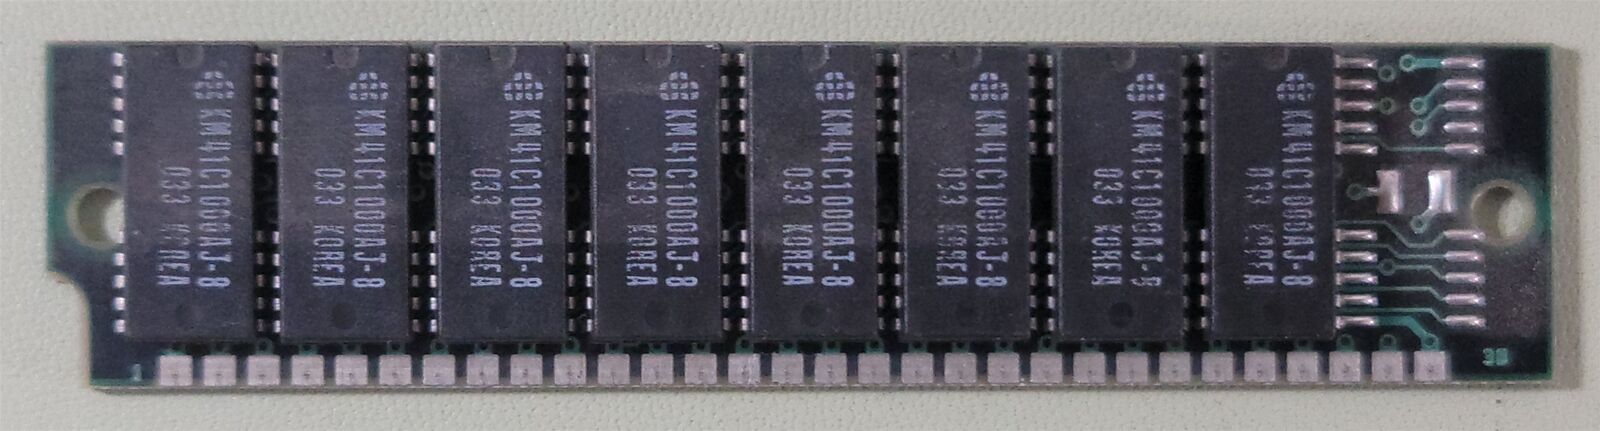 Samsung KMM581000A-8 SIMM RAM , 30-Pin, 1MX8, 80ns, CMOS, PSMA30